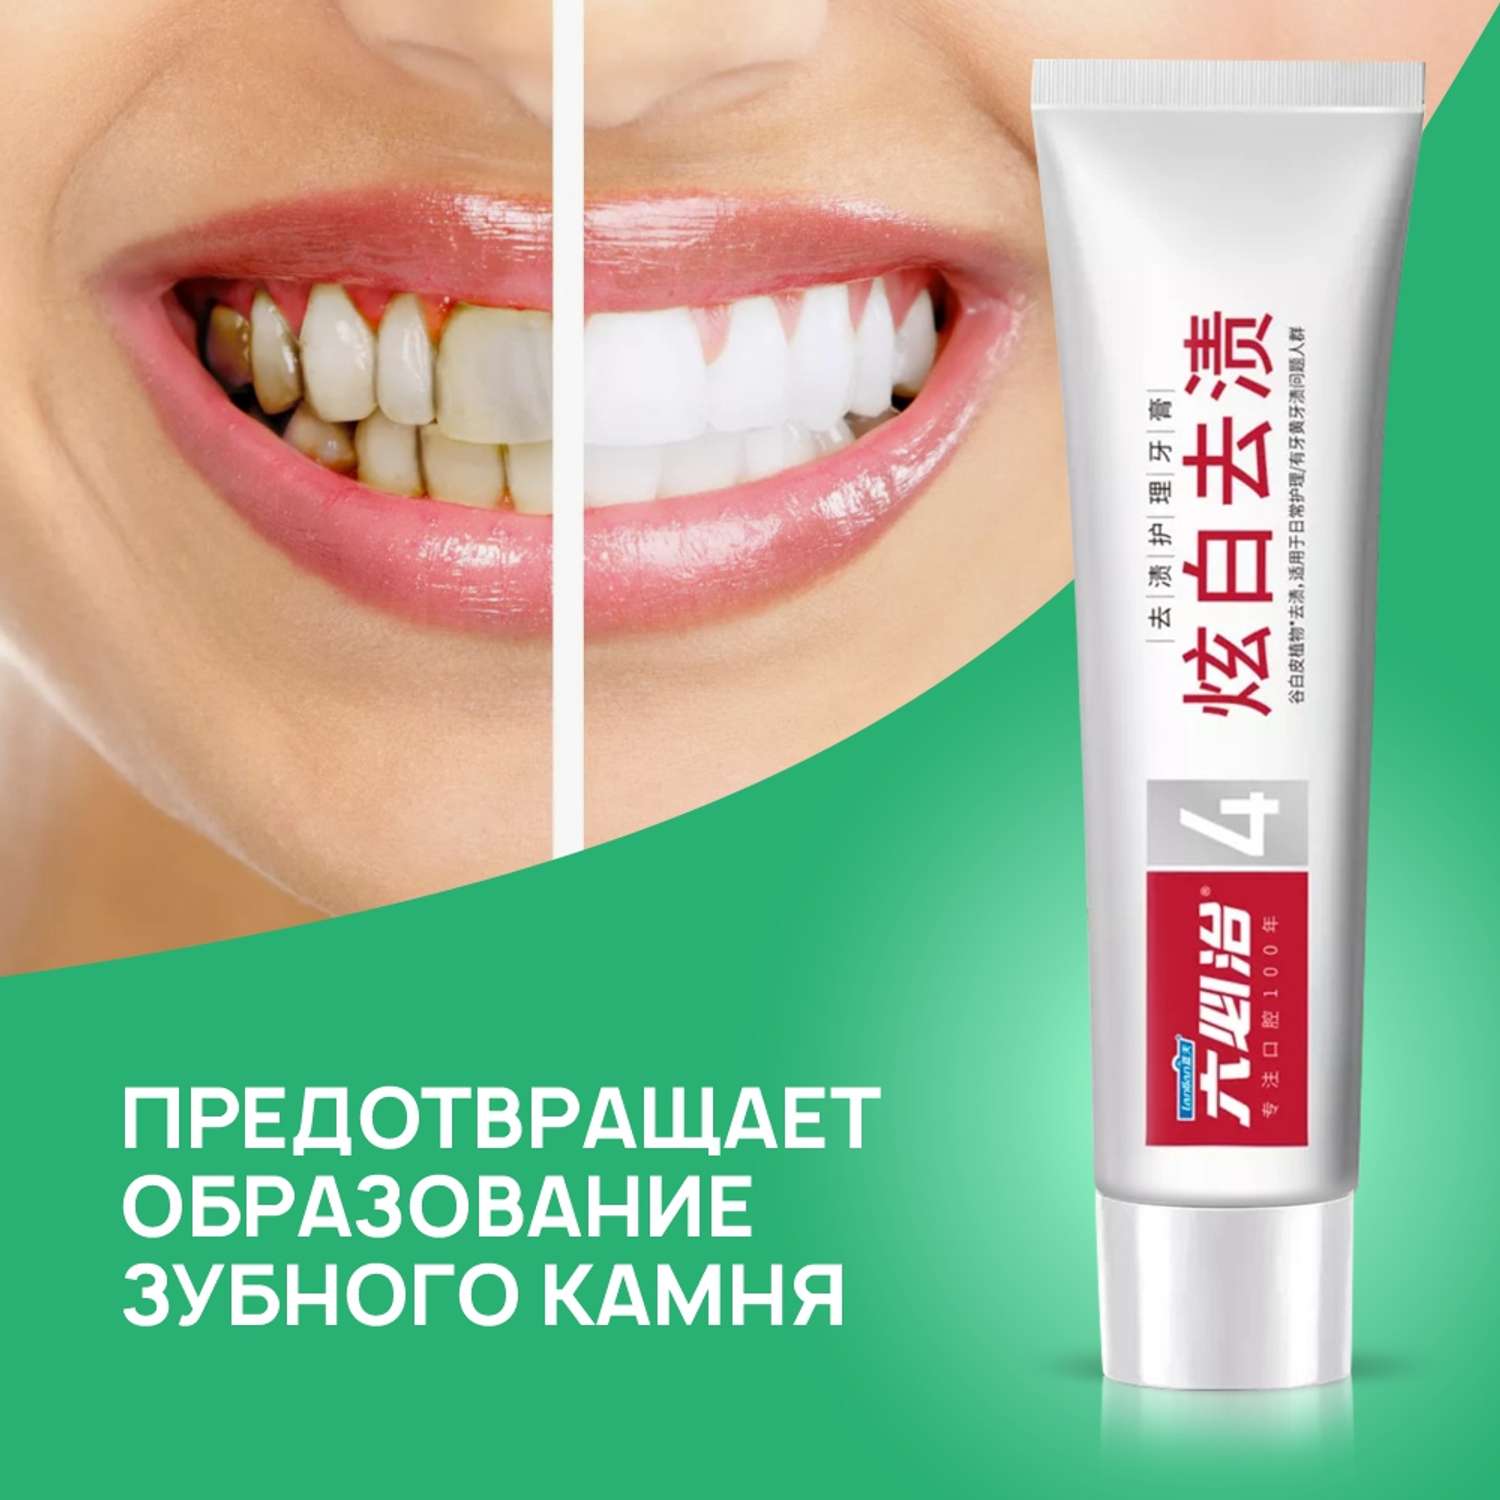 Зубная паста Liby против образования зубного камня stain removal 150 гр - фото 5